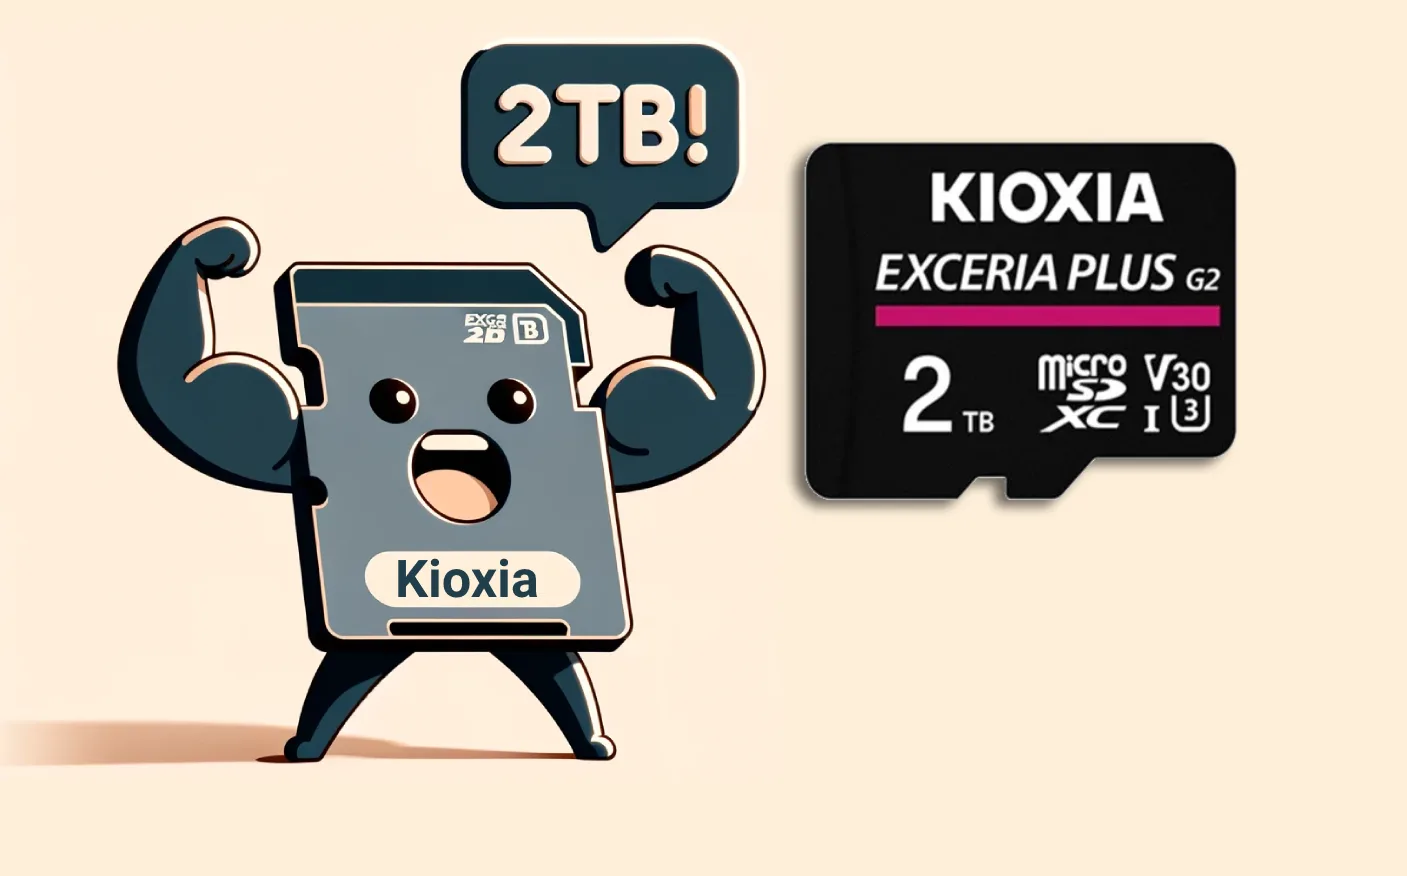 Woah! World’s first 2TB microSD card is here: Kioxia Exceria Plus G2